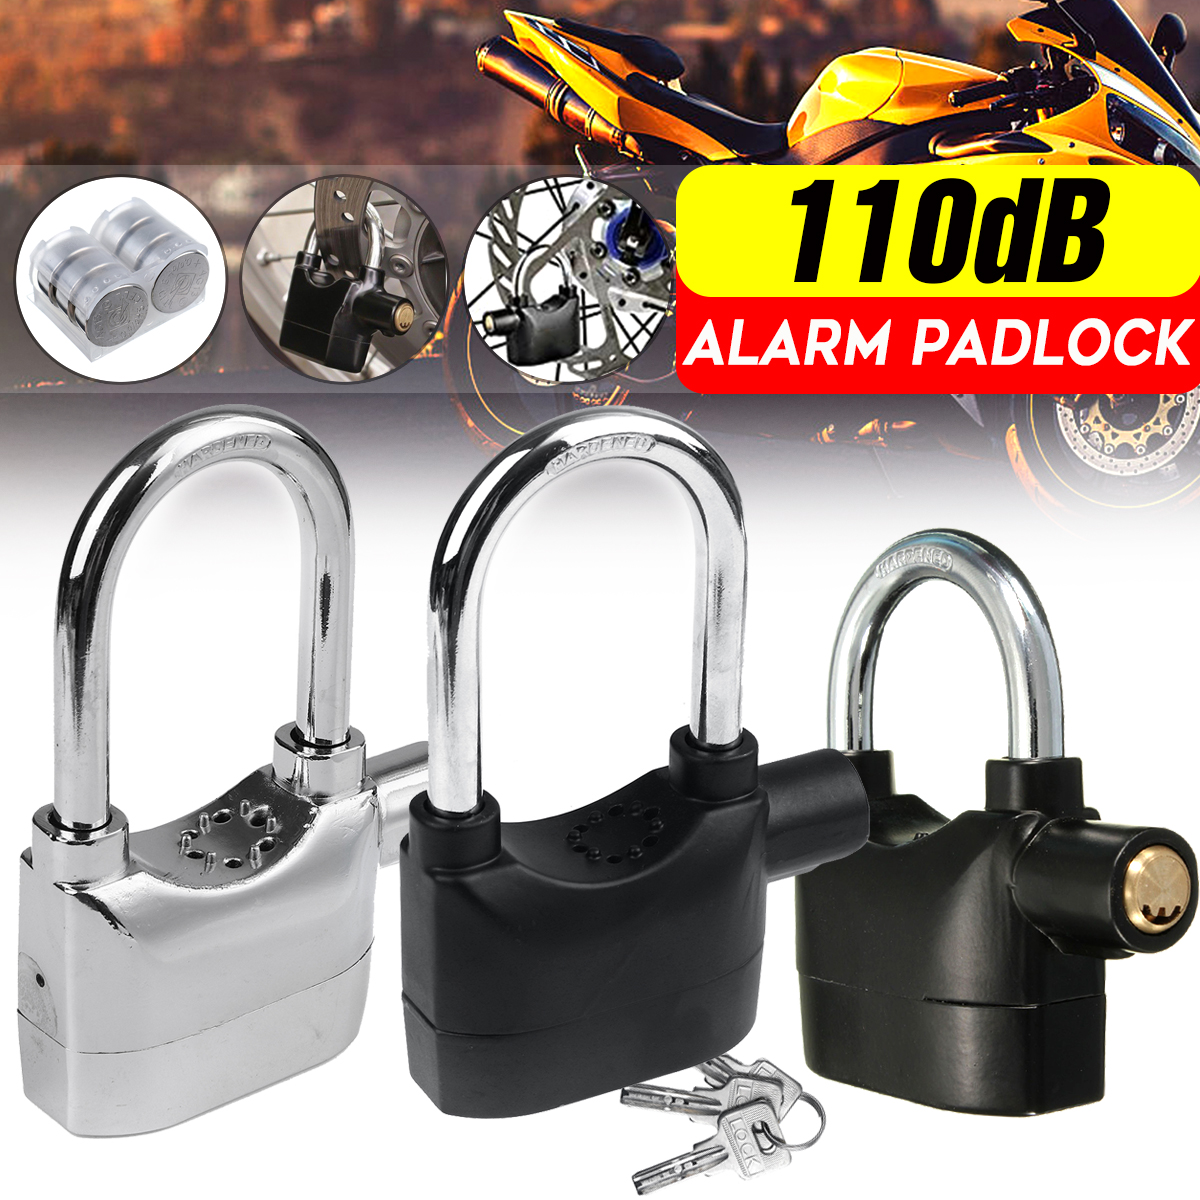 110db-Alarm-Padlock-High-Security-Sirens-Lock-For-Motorcycle-Bike-Bicycle-Home-1798039-2